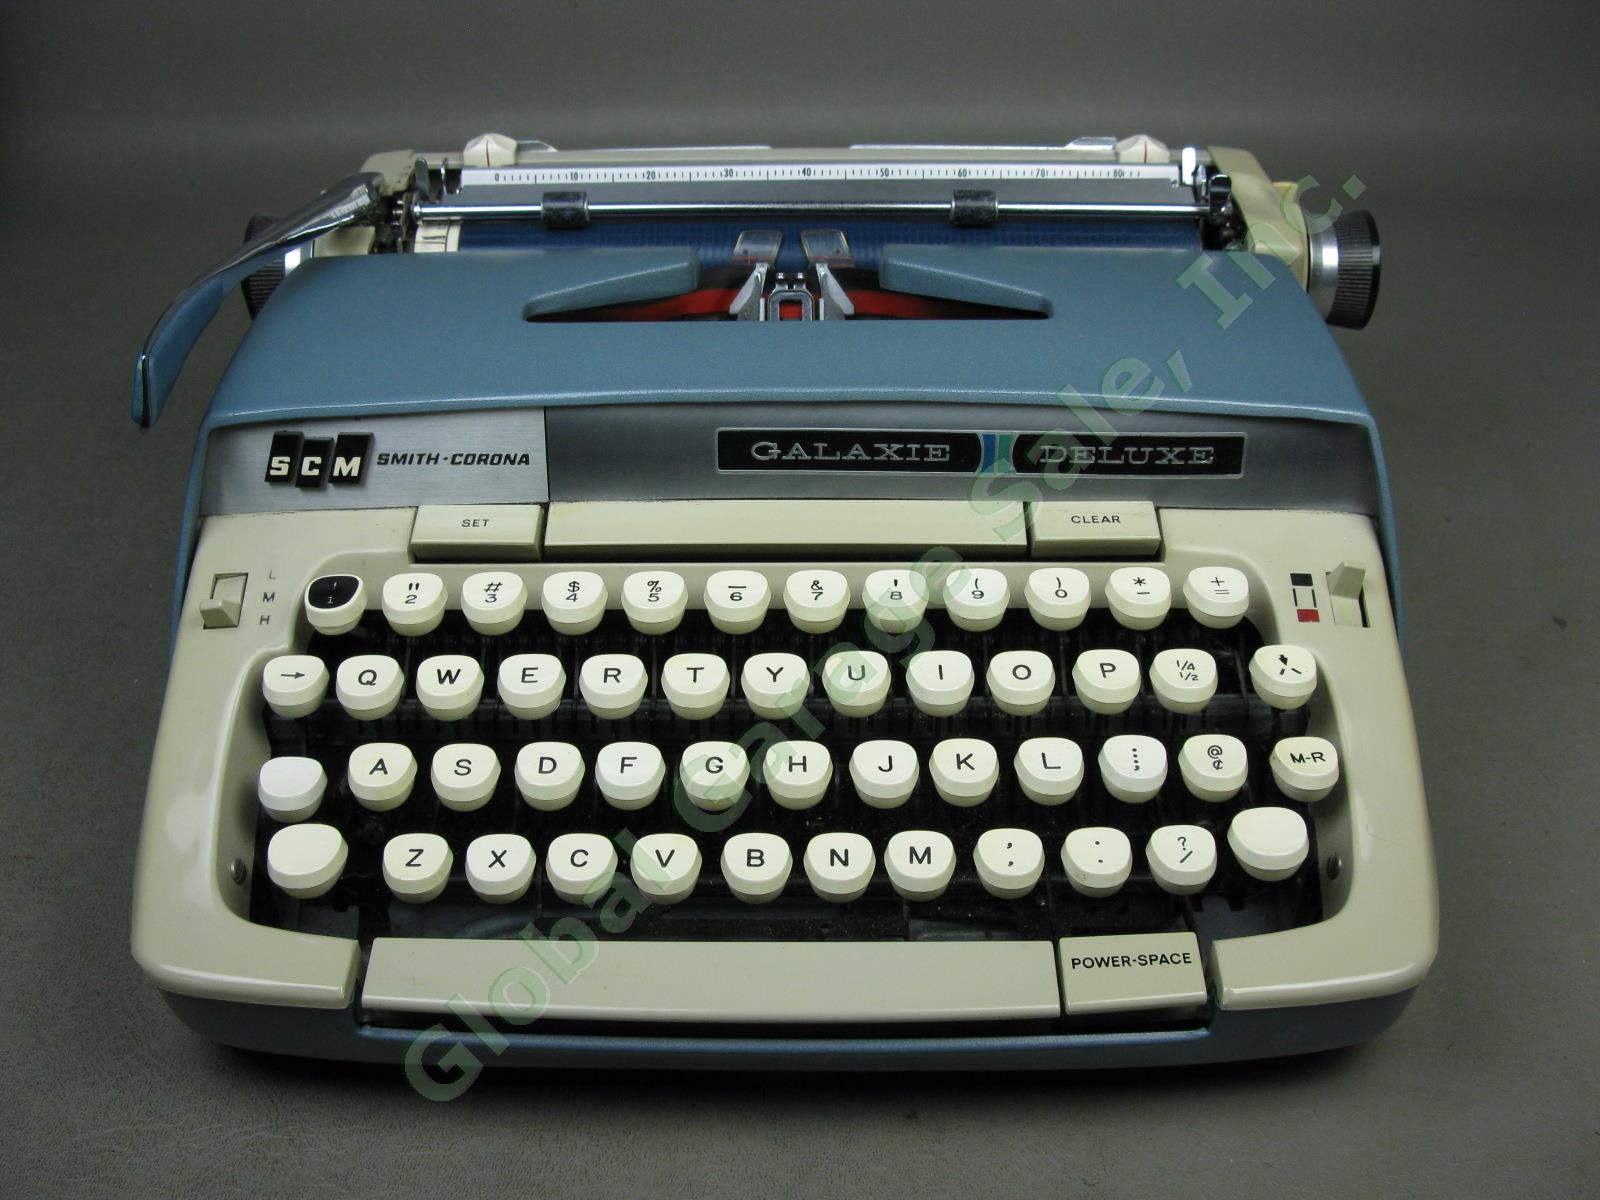 Vtg Smith-Corona Galaxie Deluxe Blue Portable Manual Typewriter W/ Case Manual + 1